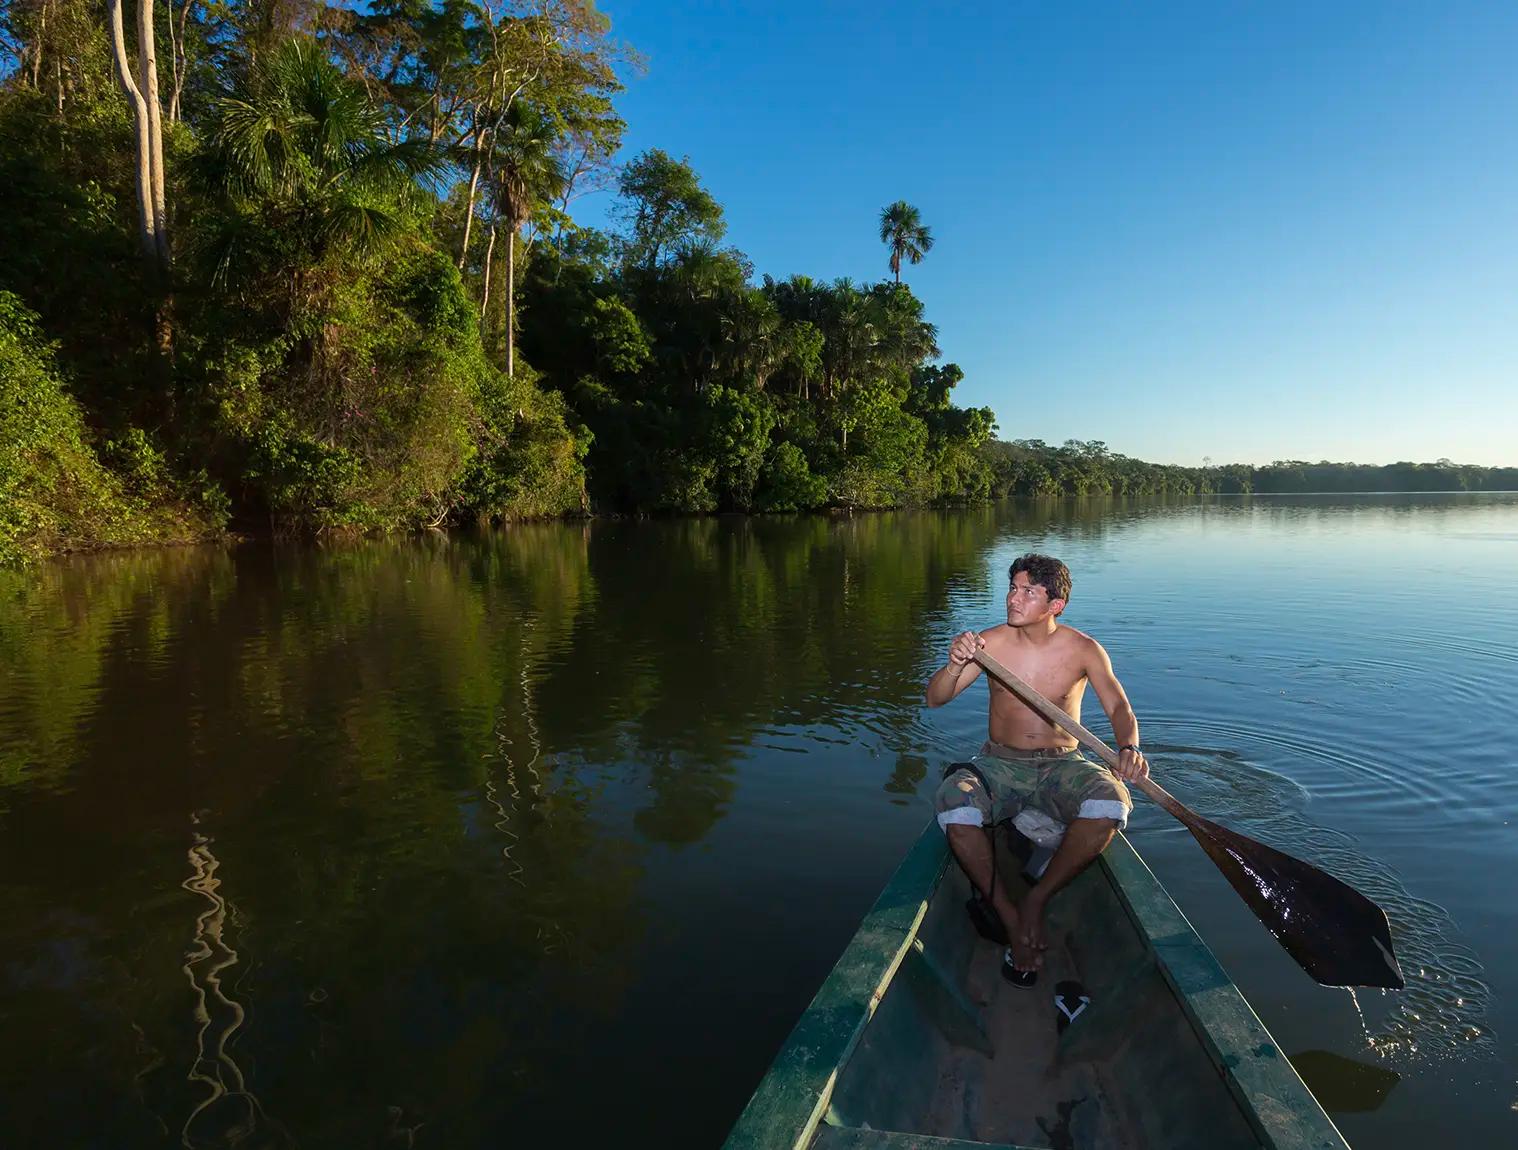 amazon rainforest travel guide